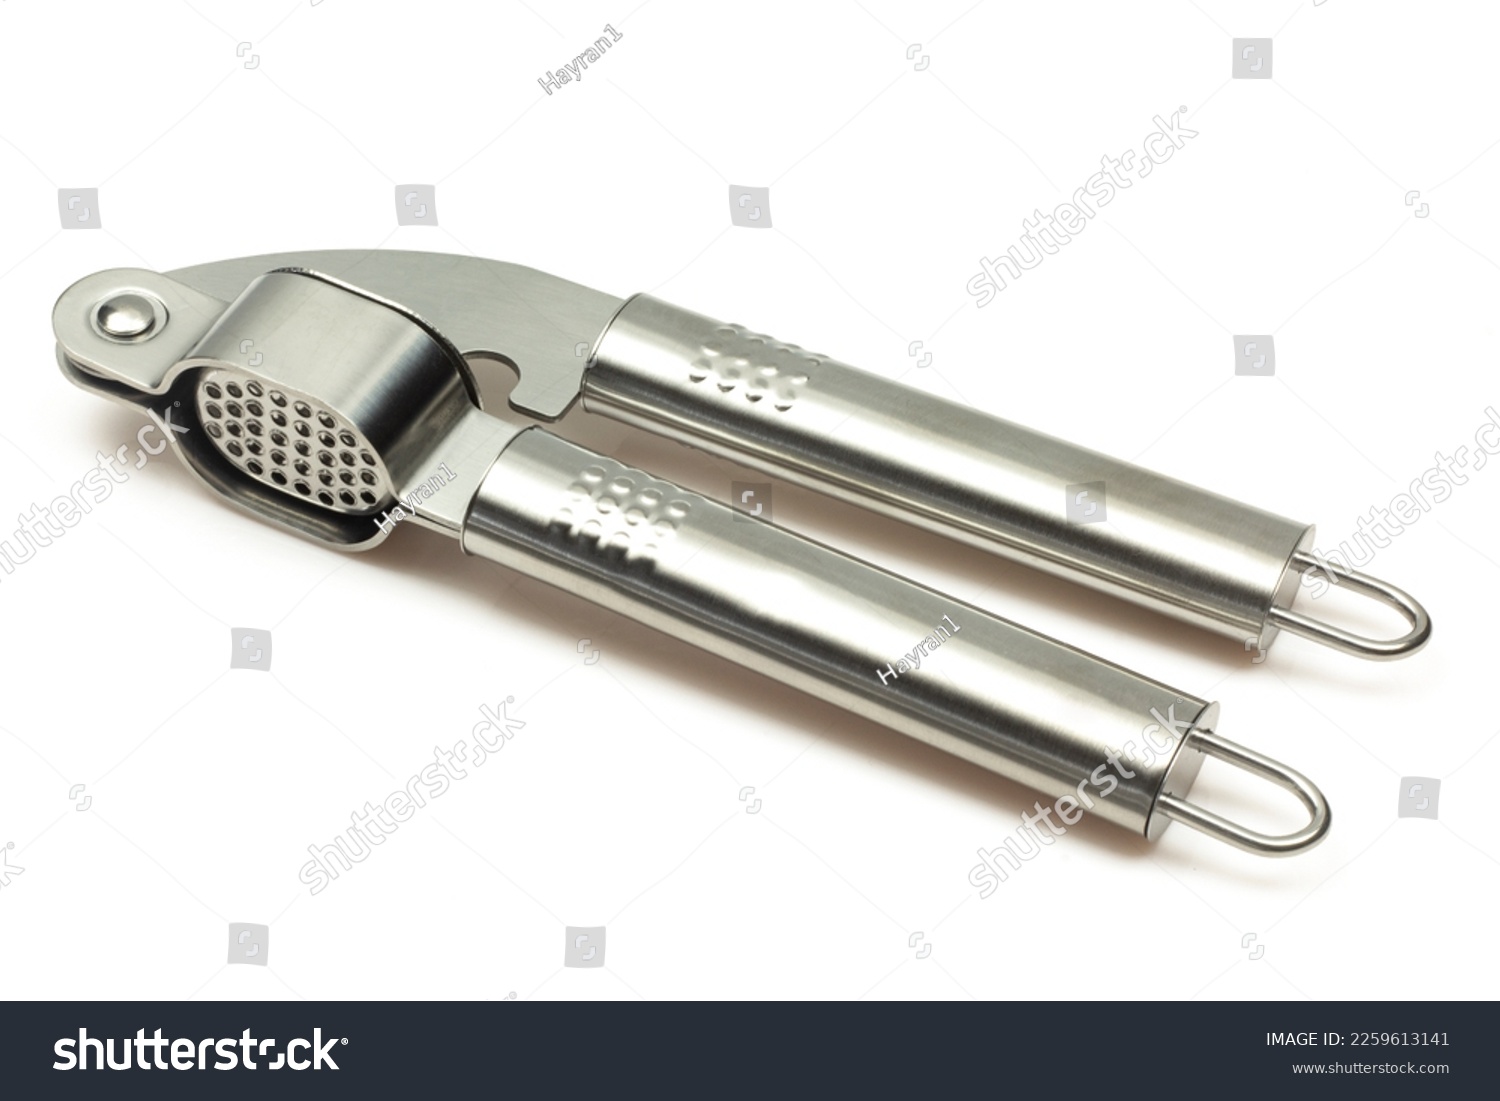 Metallic shiny garlic press crusher tool isolated on white background. Stainless kitchen utensil mincer #2259613141